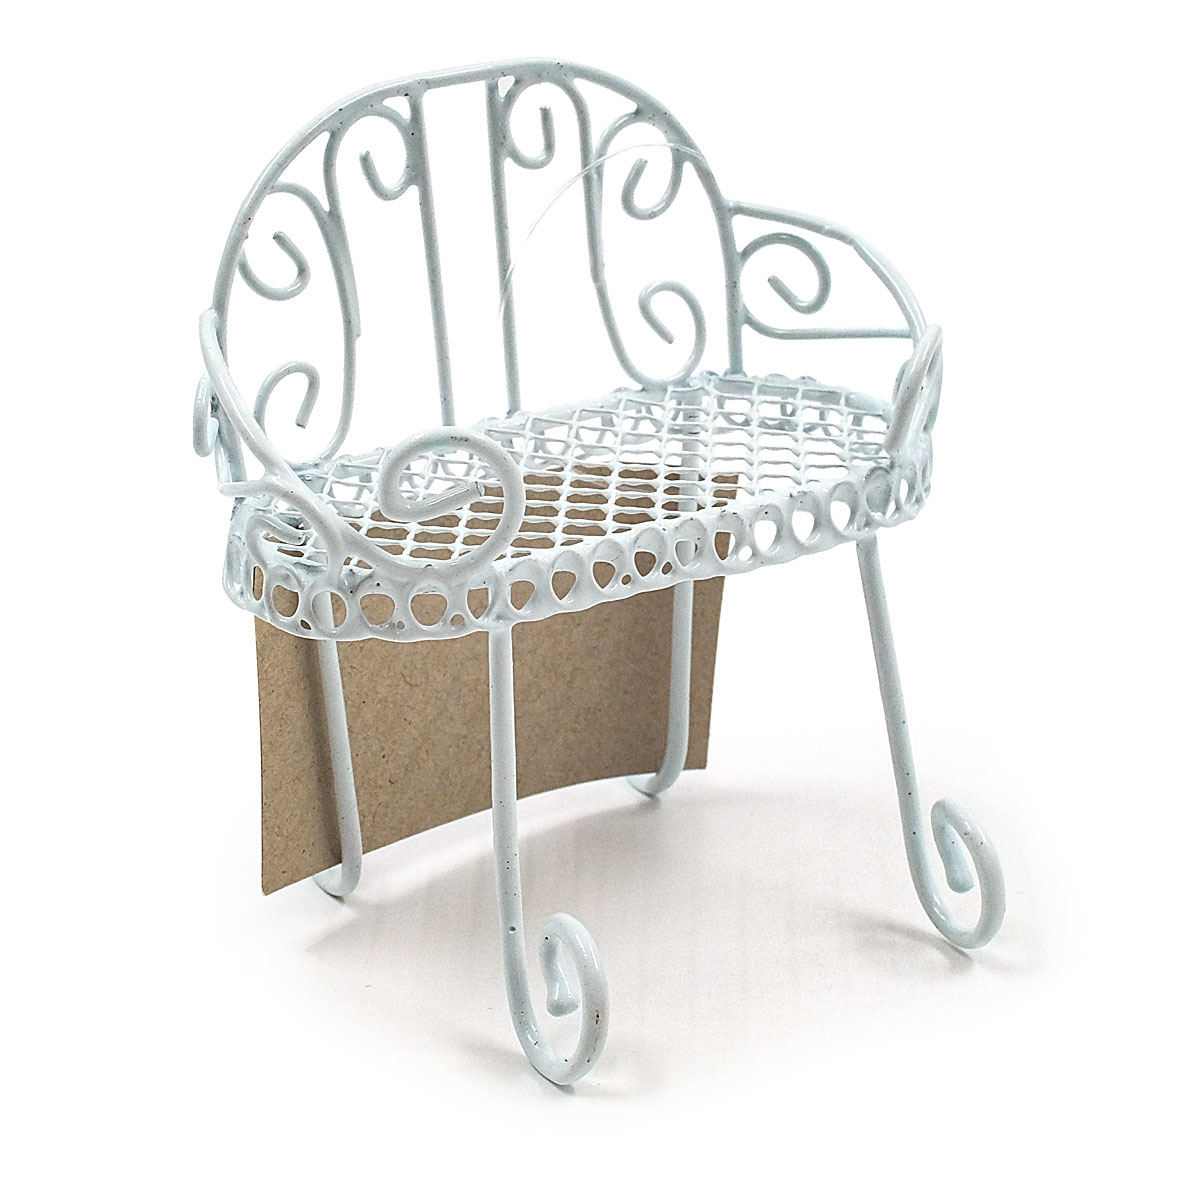 Мебель для куклы Астра металлический мини стул, белый KB3135 мебель для куклы астра металлическая мини скамейка